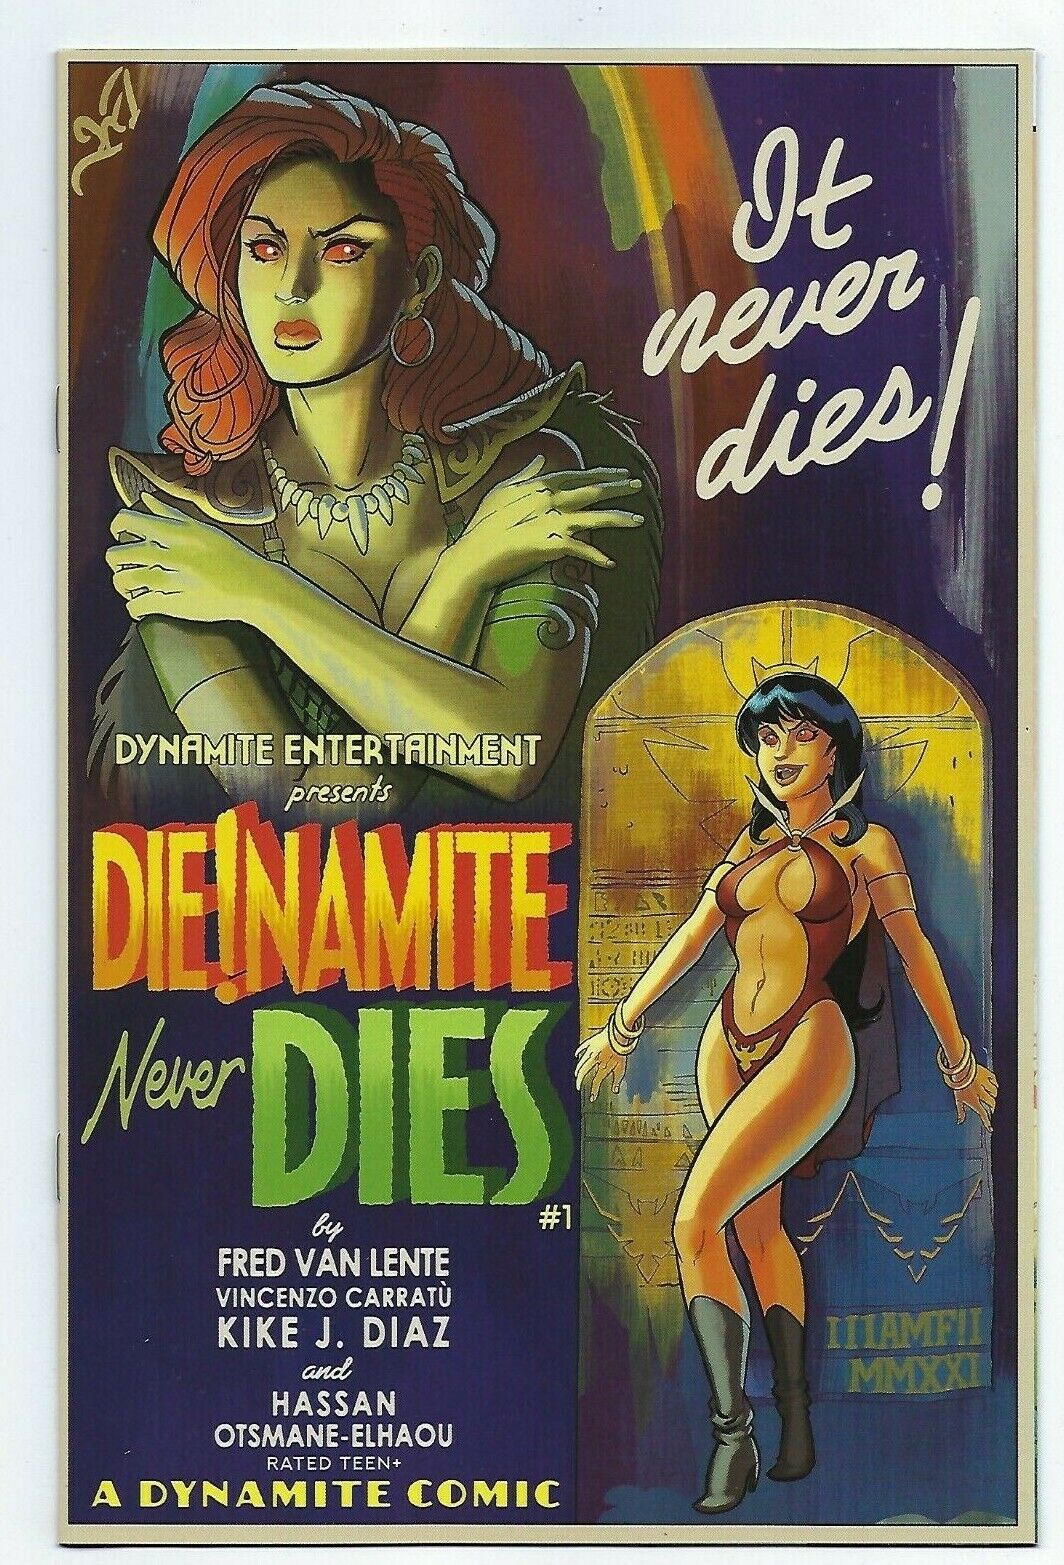 Dynamite DIENAMITE NEVER DIES #1 first printing cover A